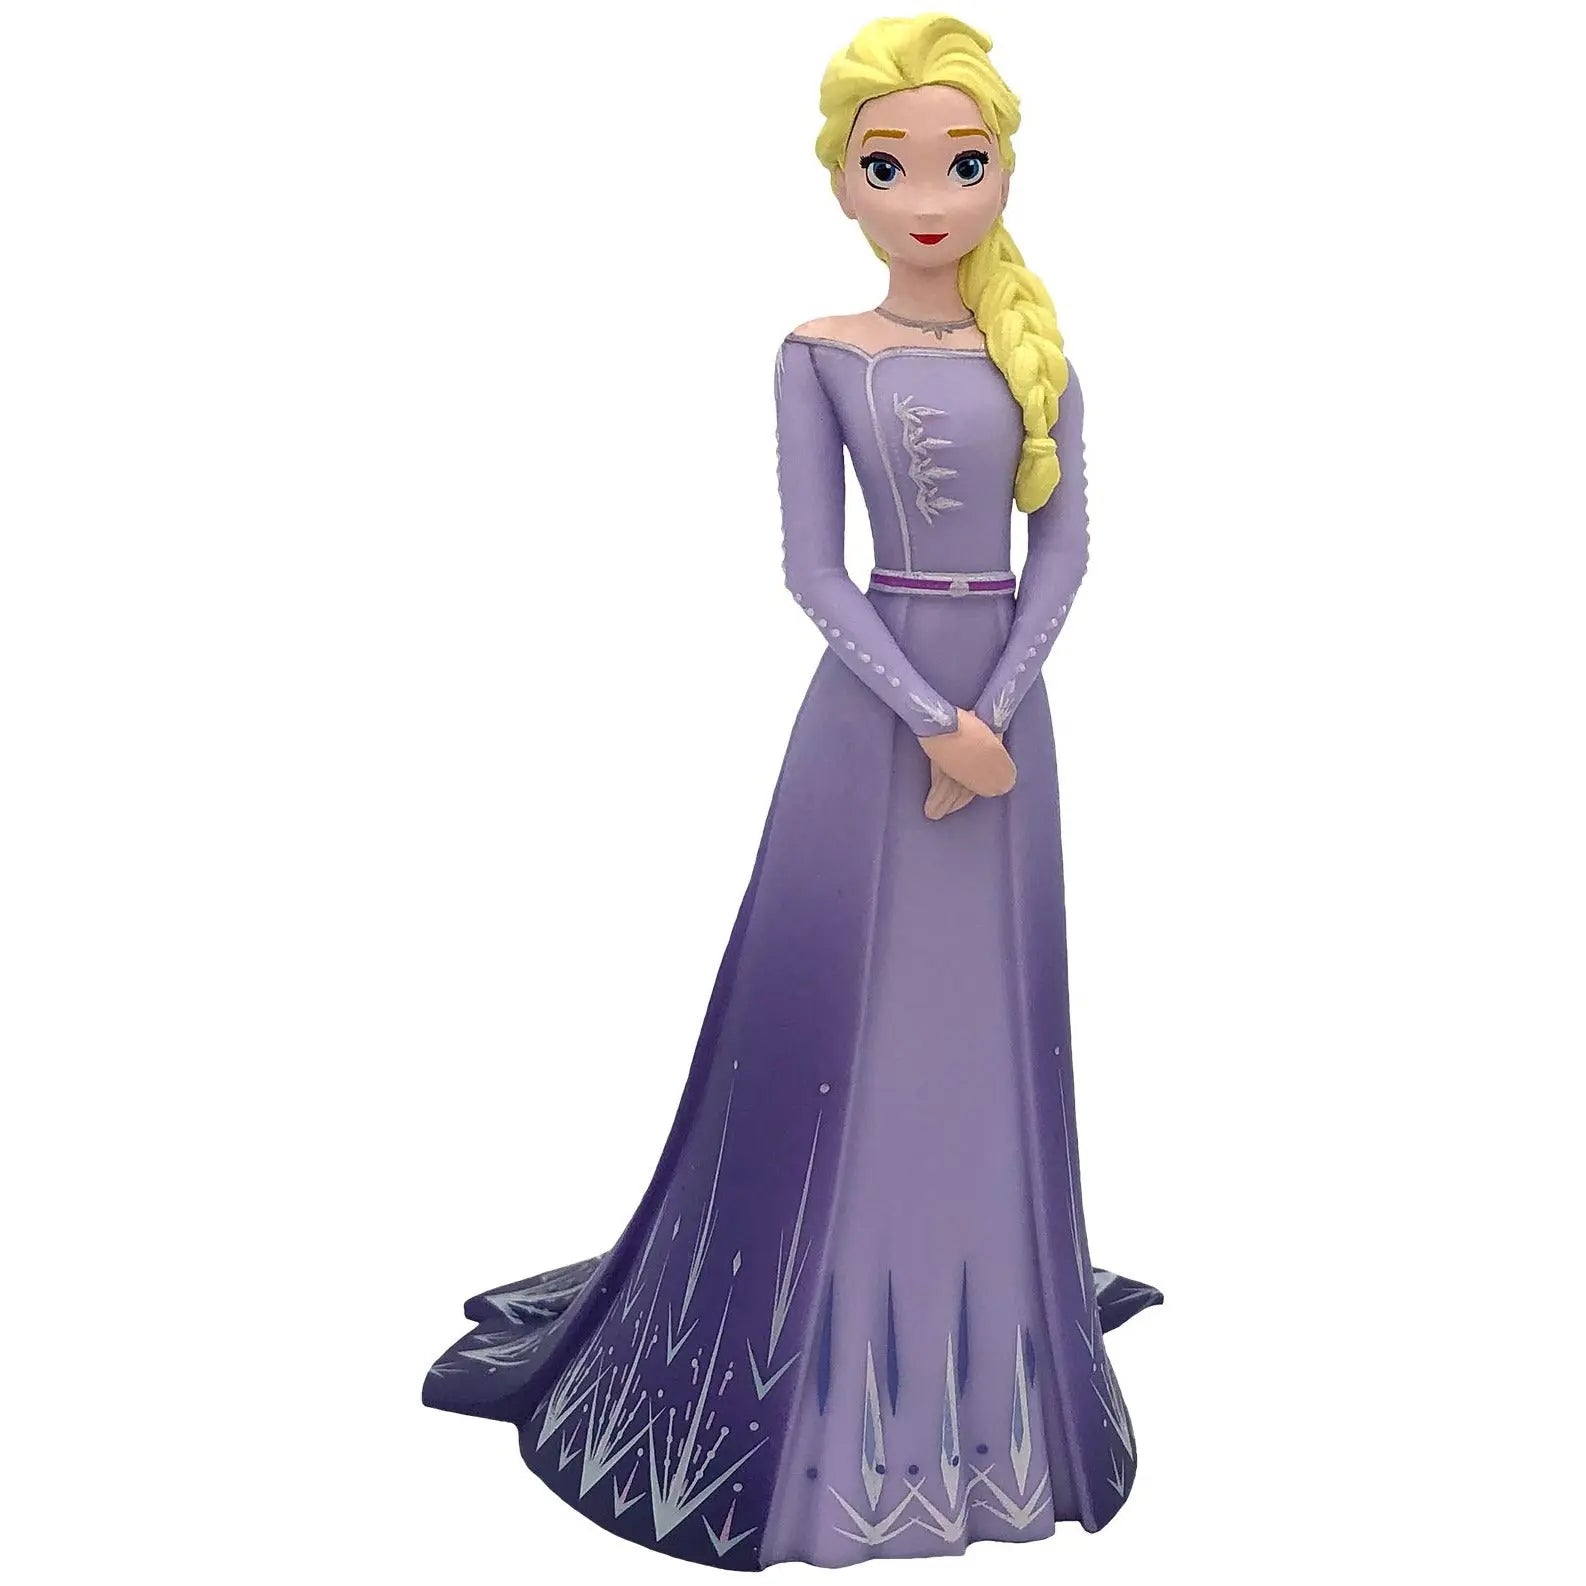 Bullyland Disney Frozen 2 Elsa with Purple Dress Figure Bullyland